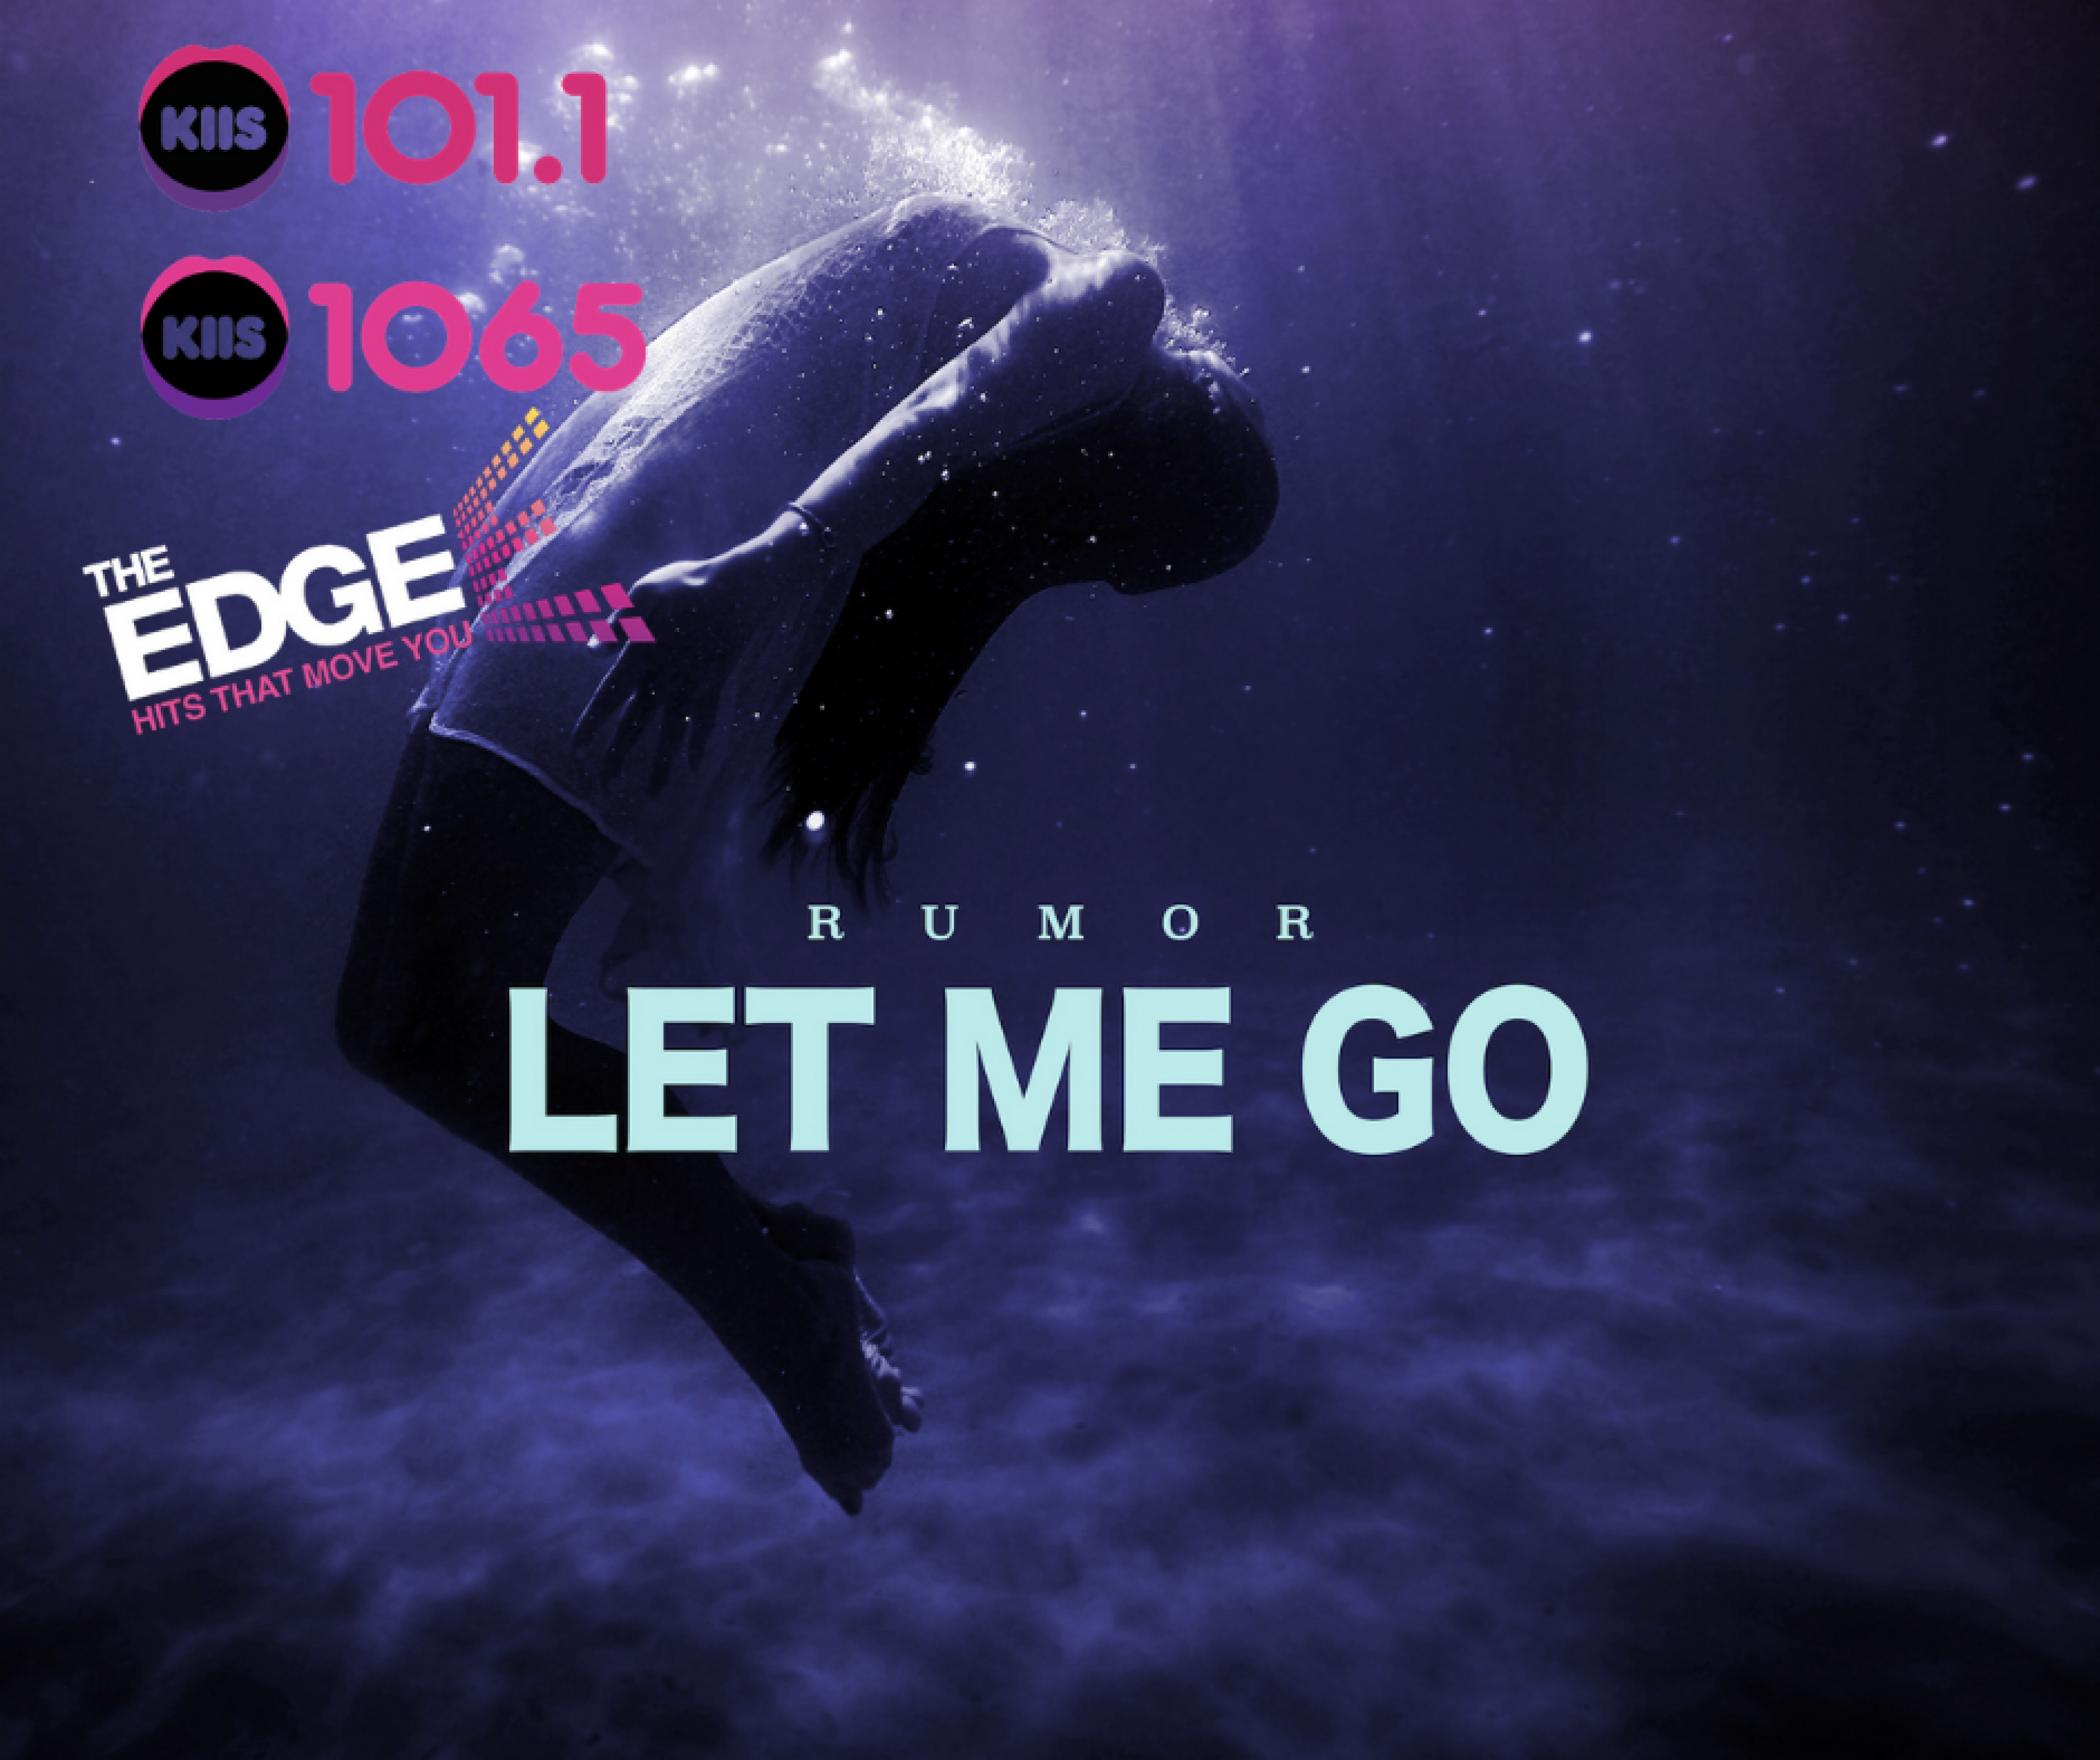 Rumor - 'Let Me Go' Added ATB KIIS 101.1, KIIS 106.5 & The Edge 96.1